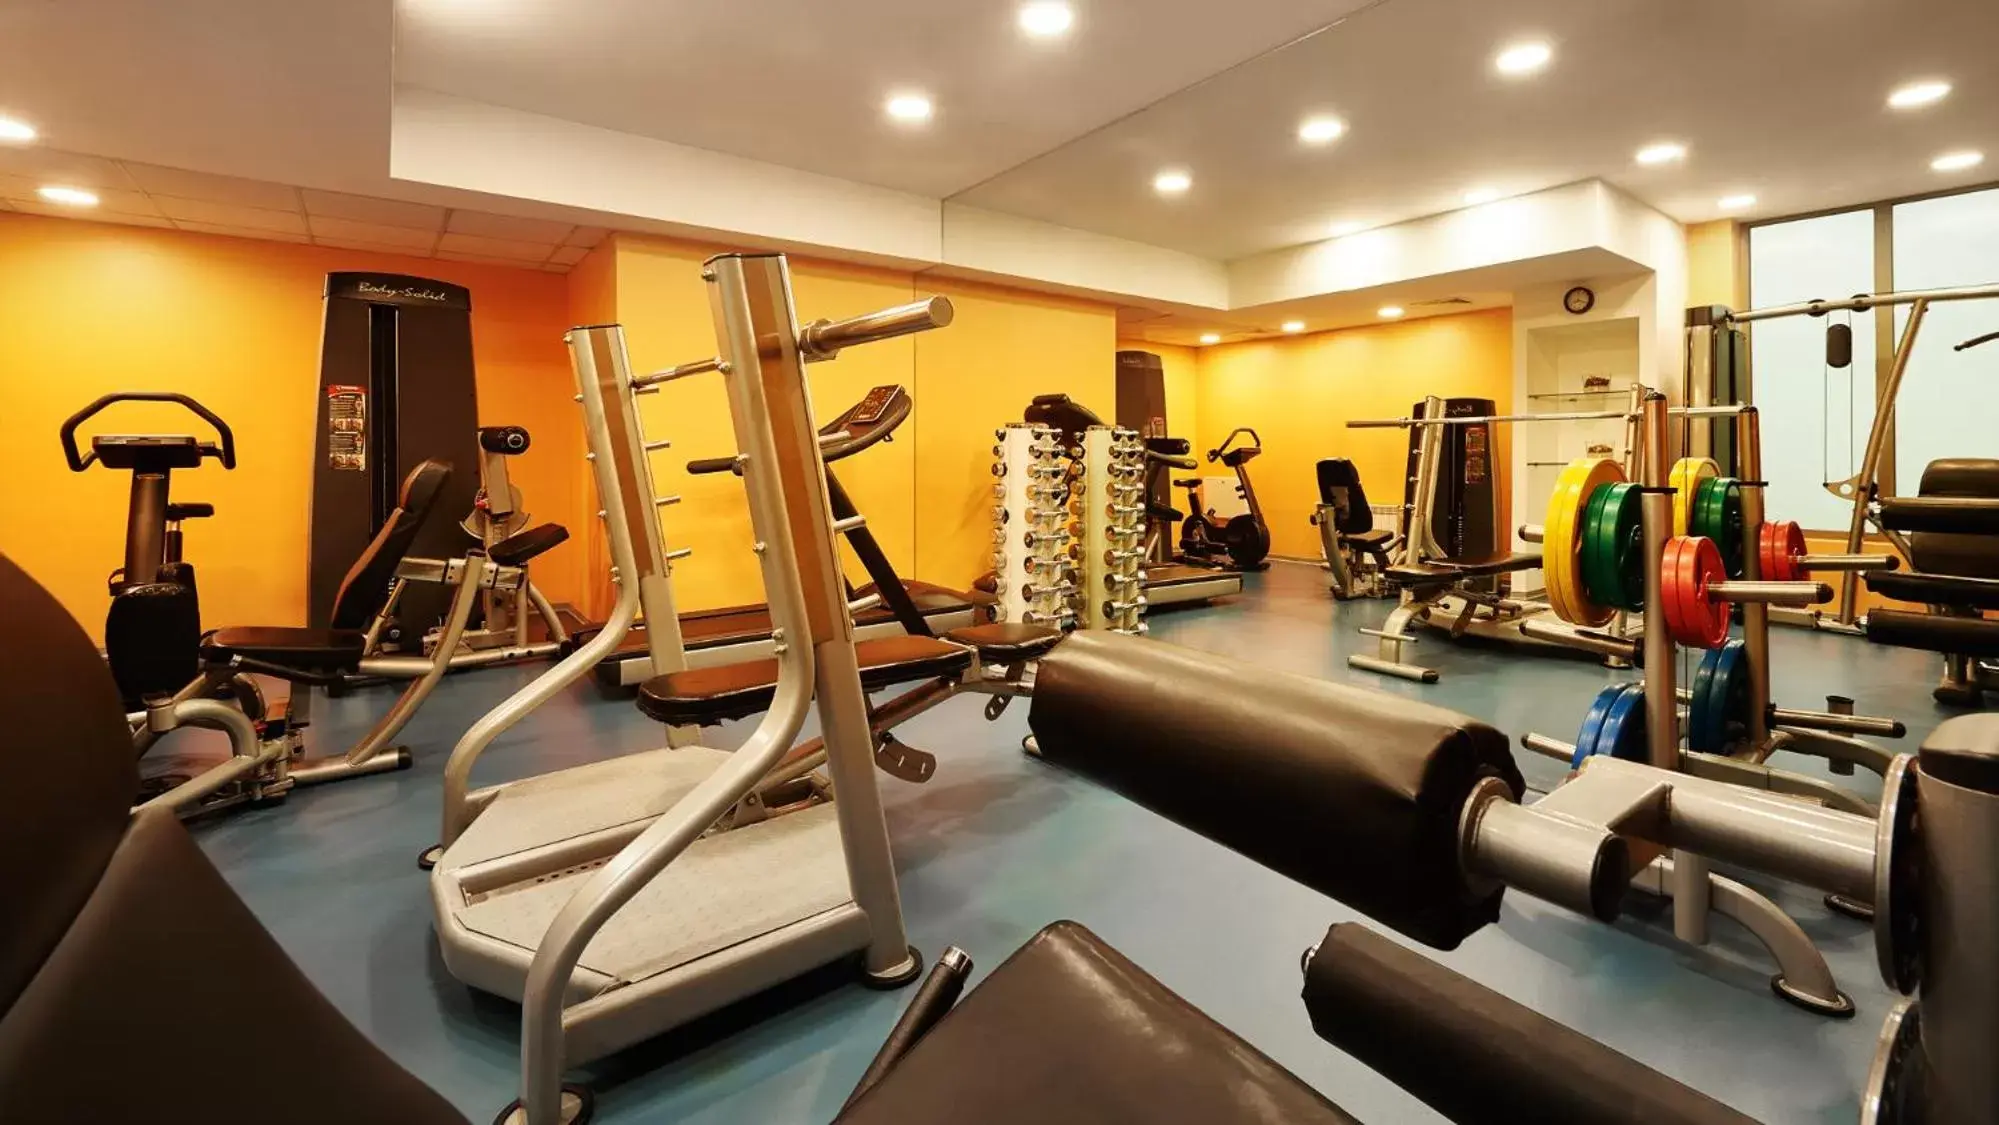 Fitness centre/facilities, Fitness Center/Facilities in Metropolitan Hotel Sofia, a member of Radisson Individuals